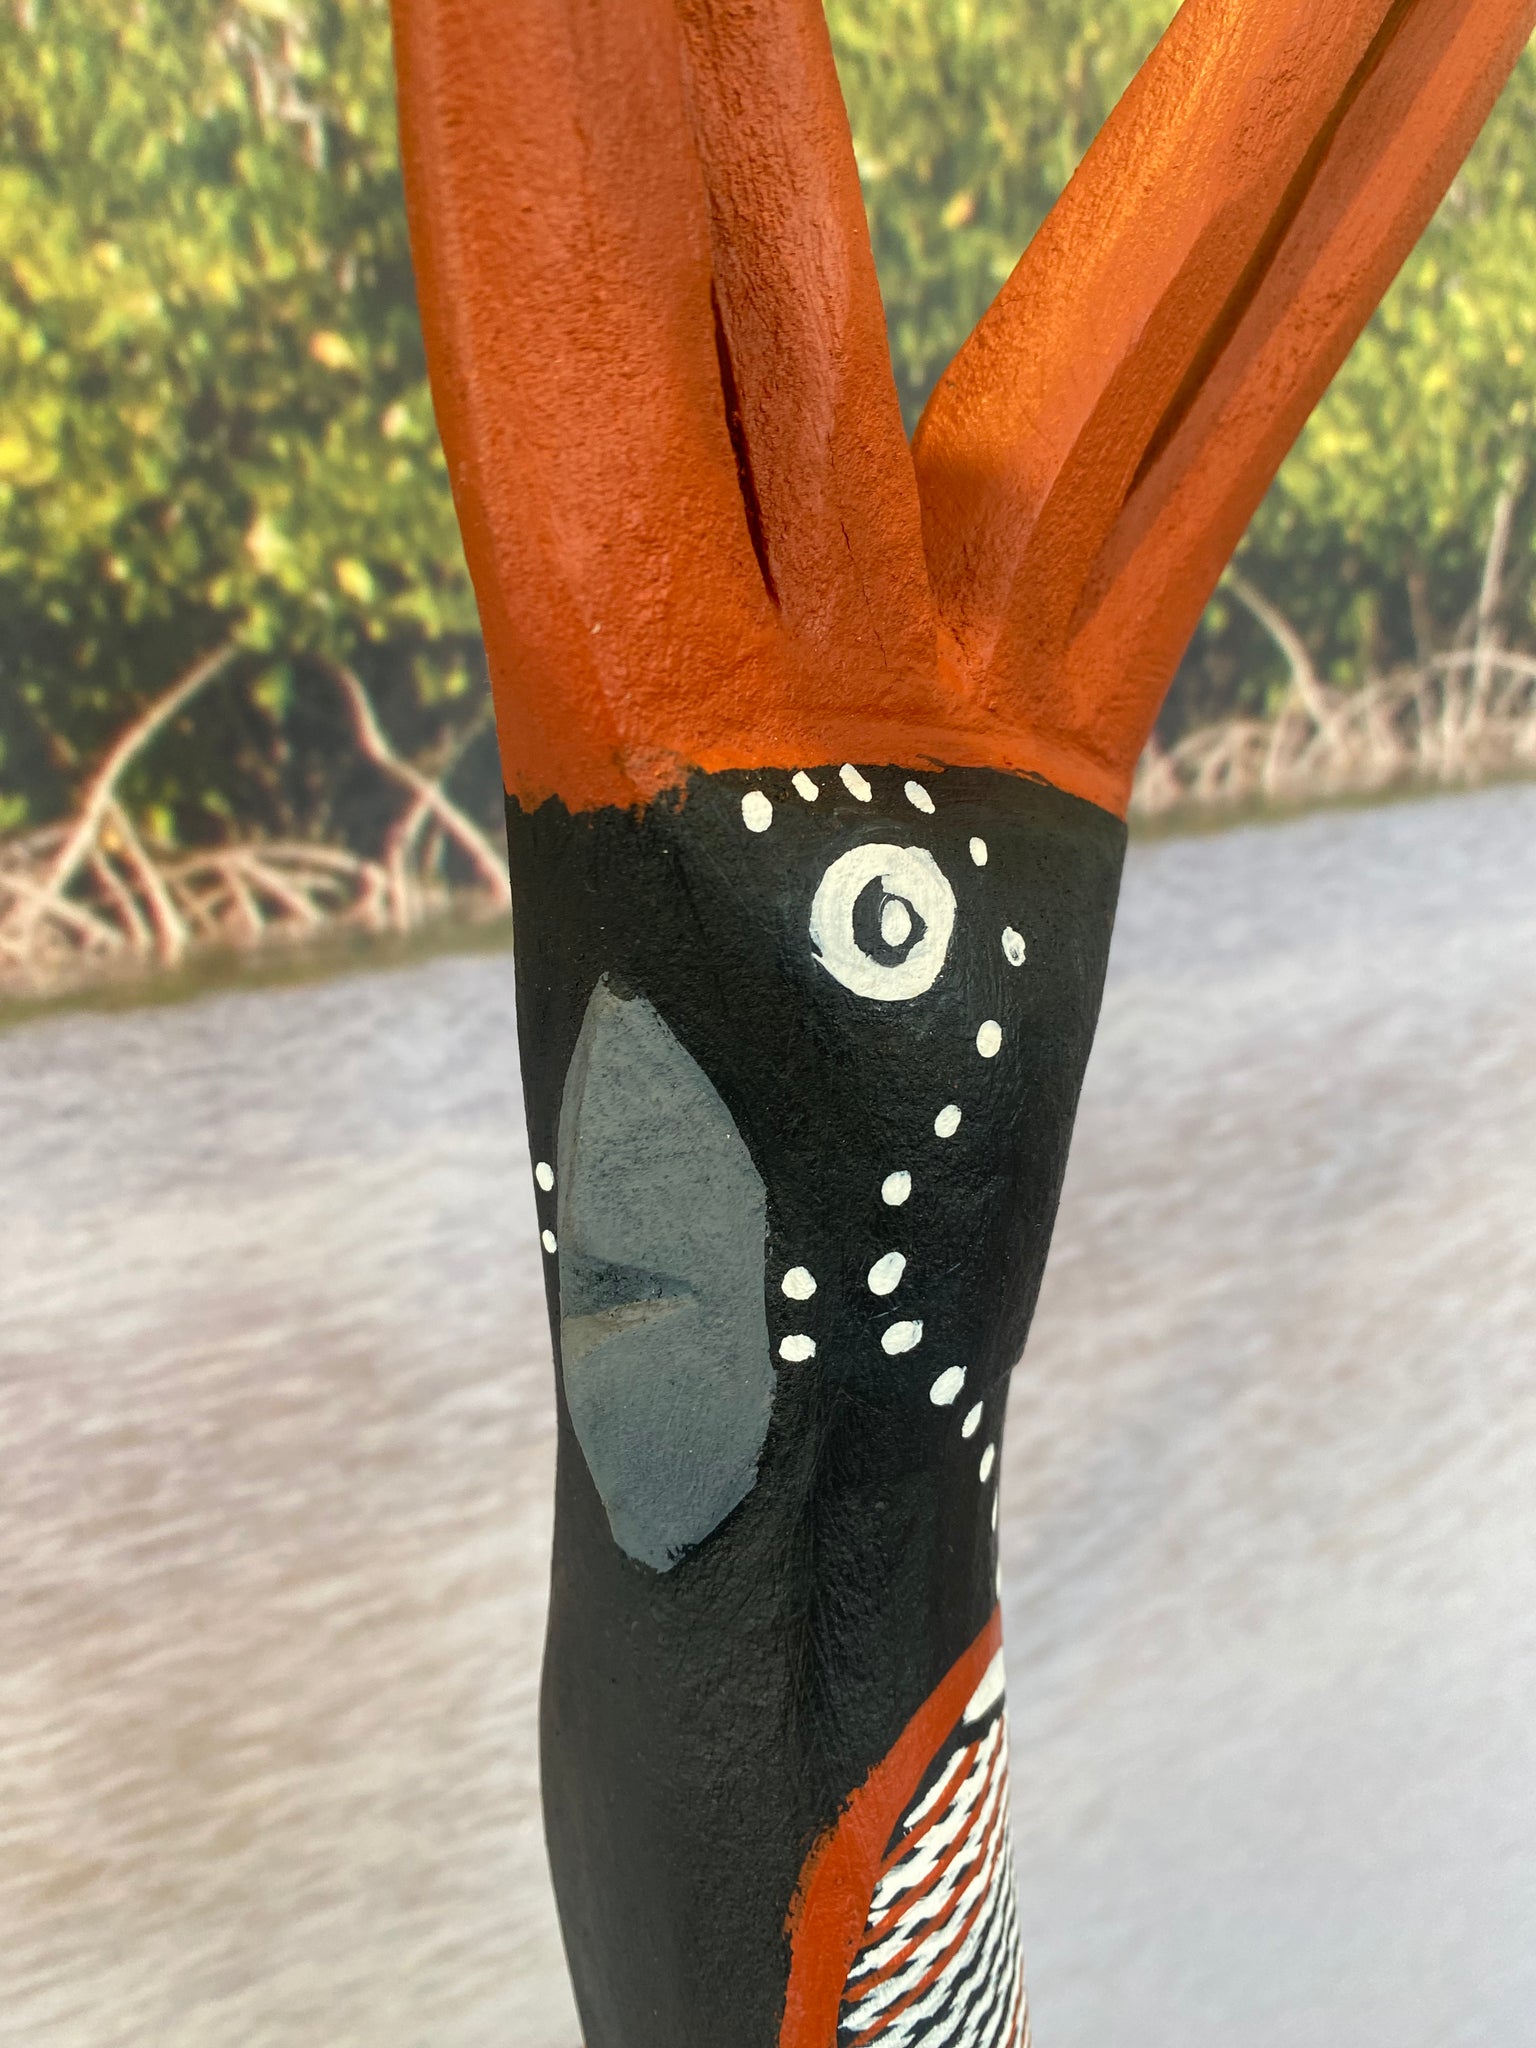 30. Karnamarr (Red Tailed Black Cockatoo)